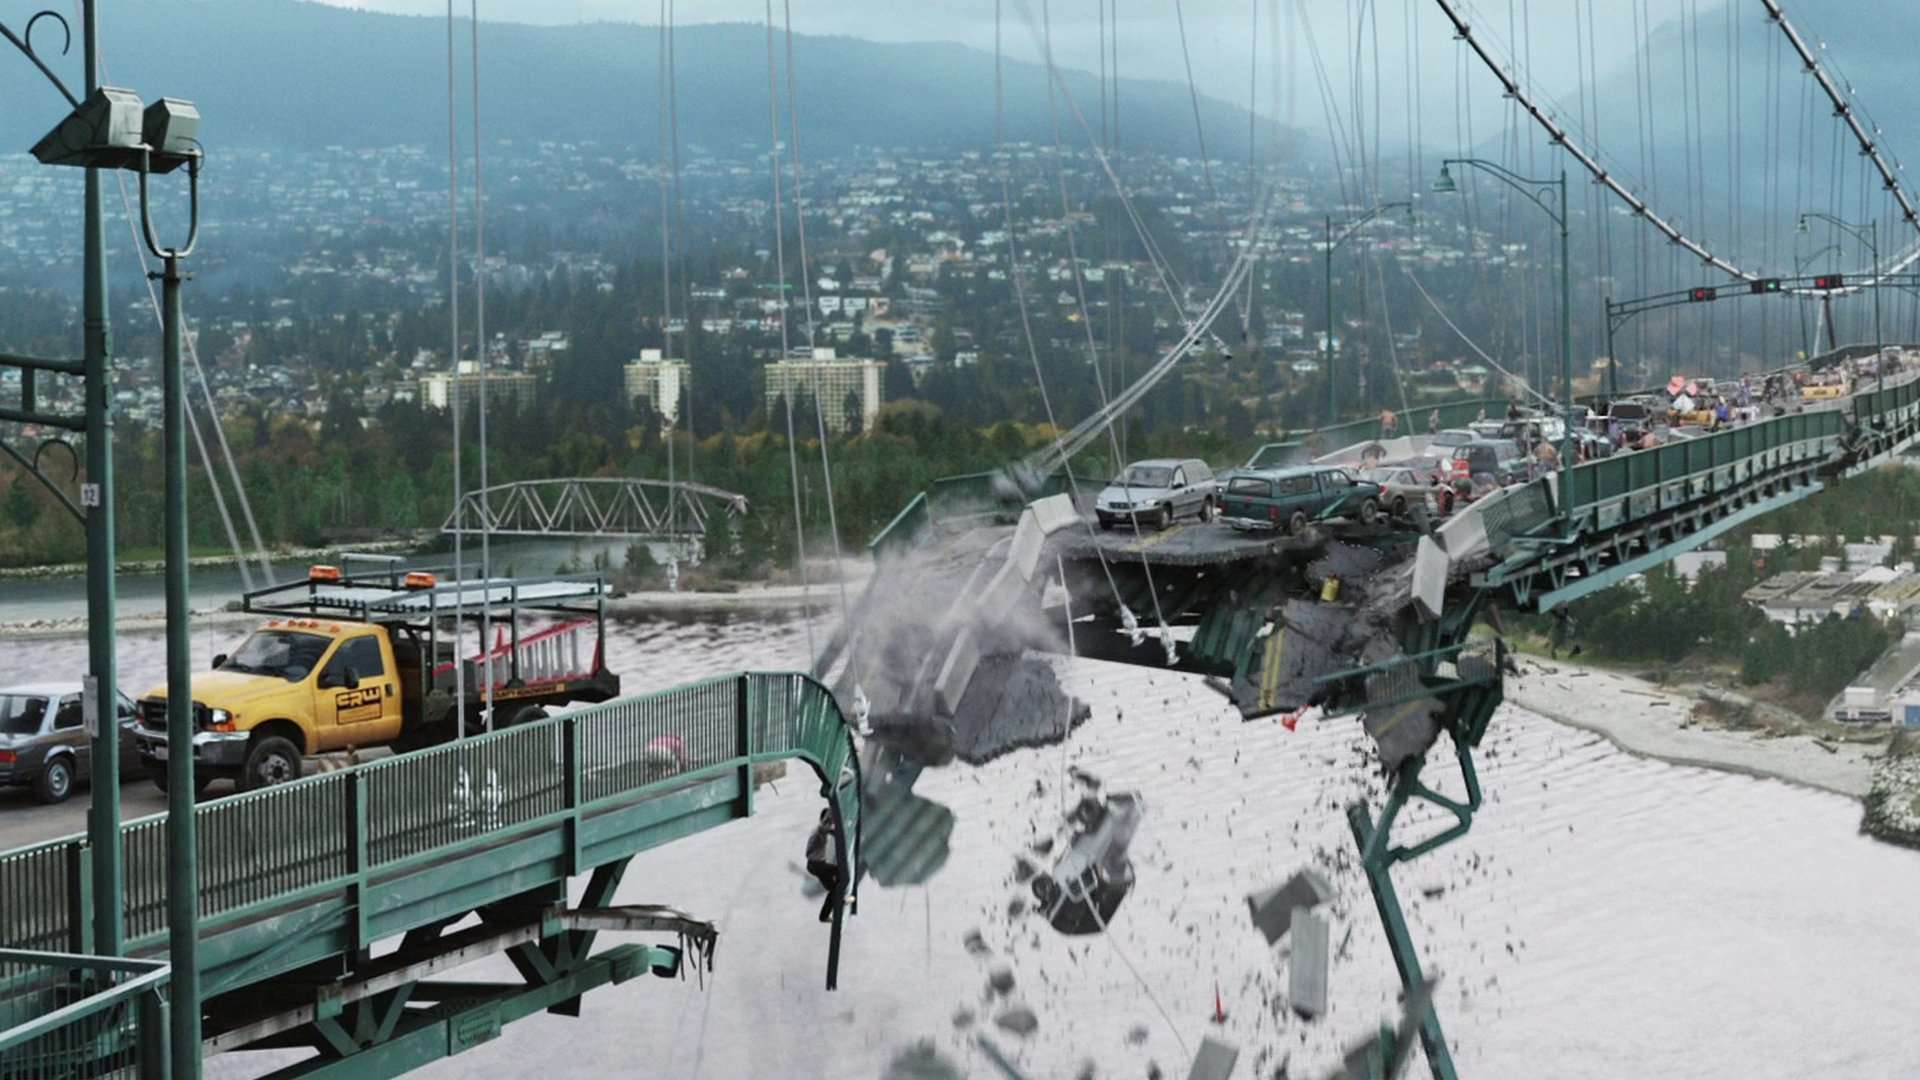 The opening bridge collapse scene in Final Destination 5 (2011)